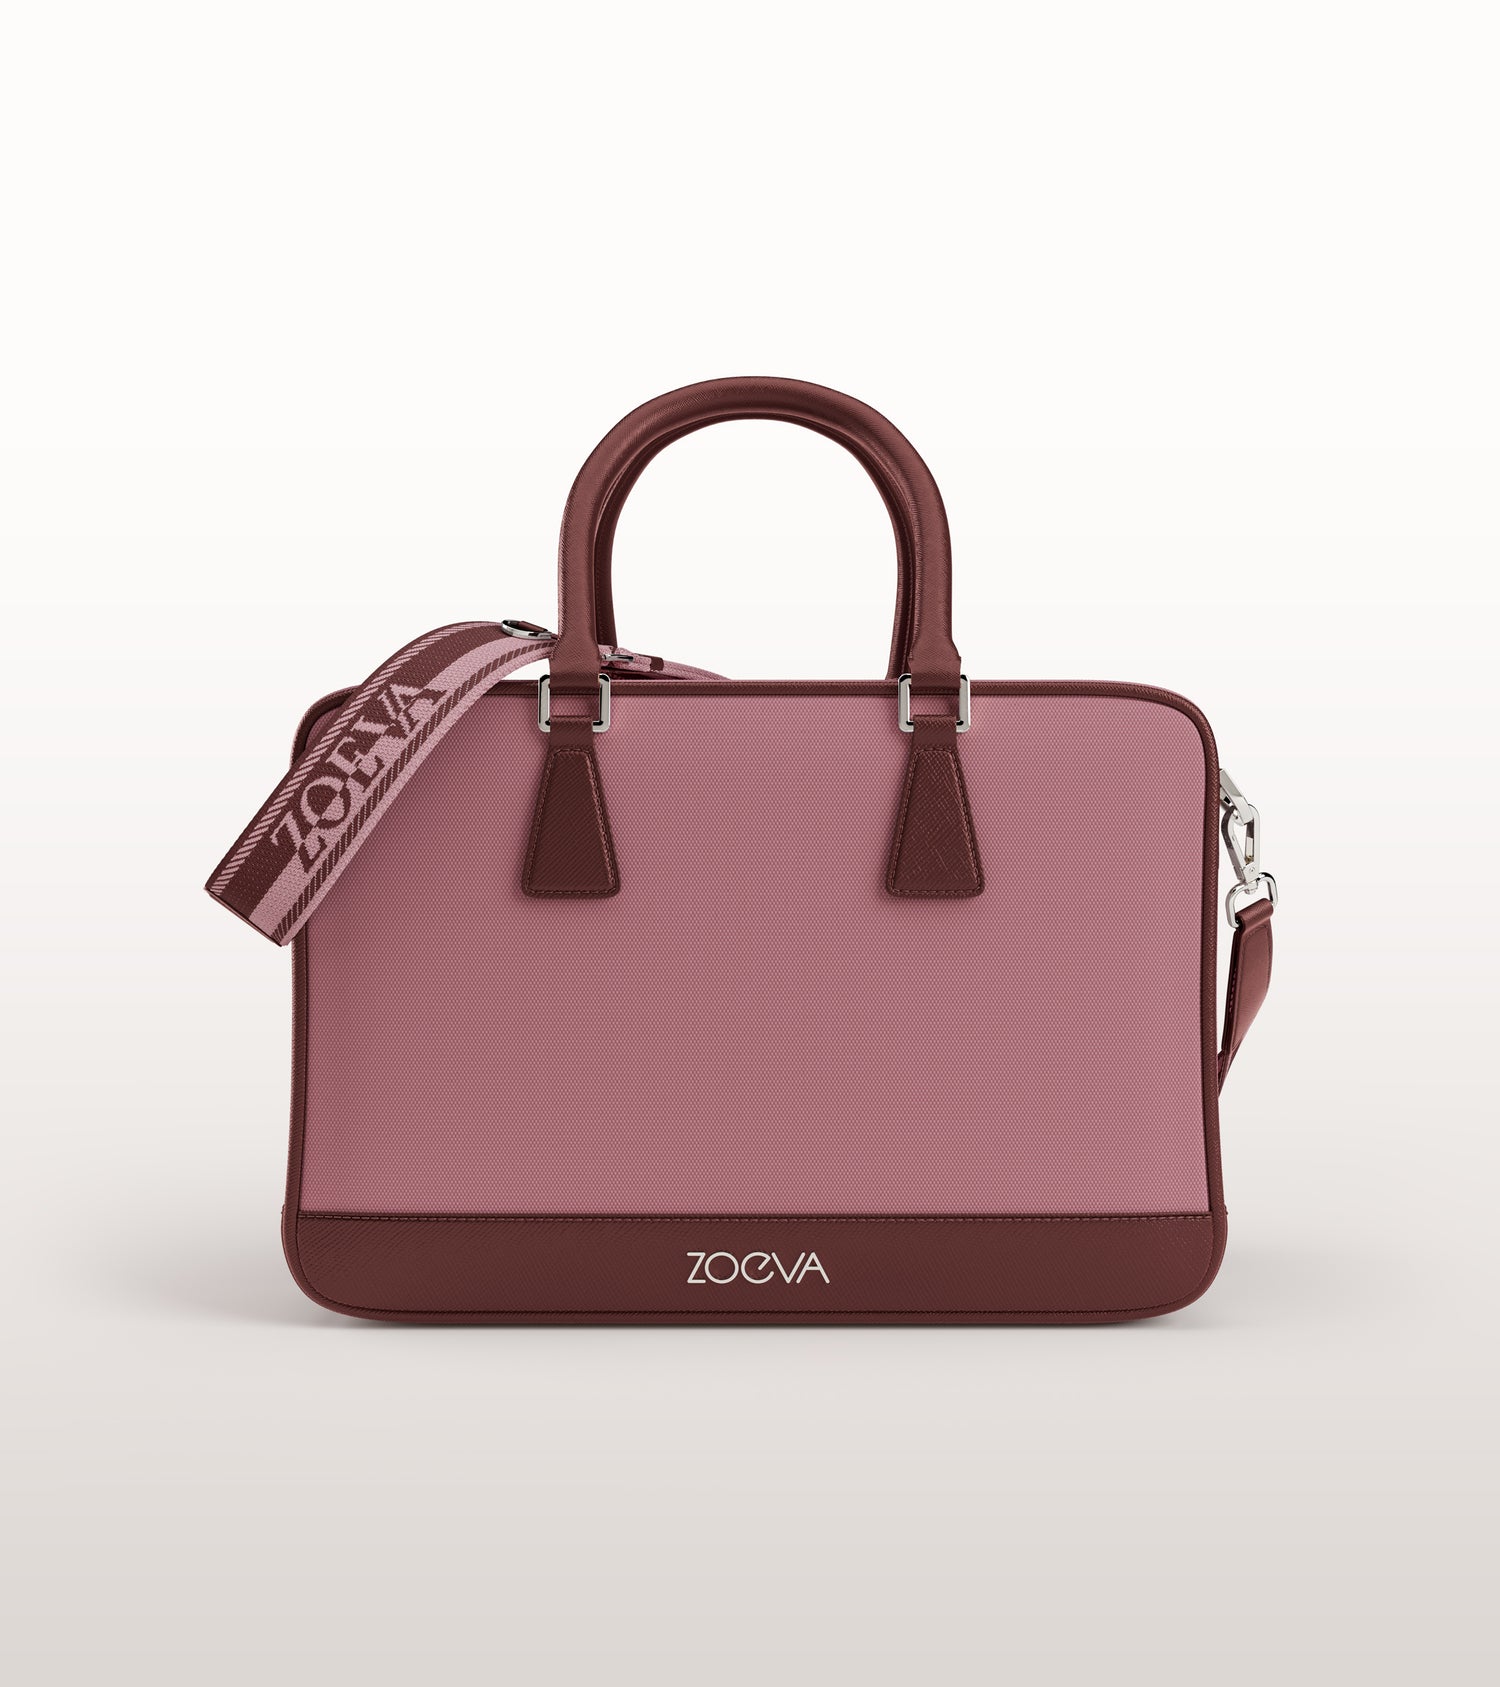 ZOEVA - The Zoe Bag (Dusty Bordeaux) - 